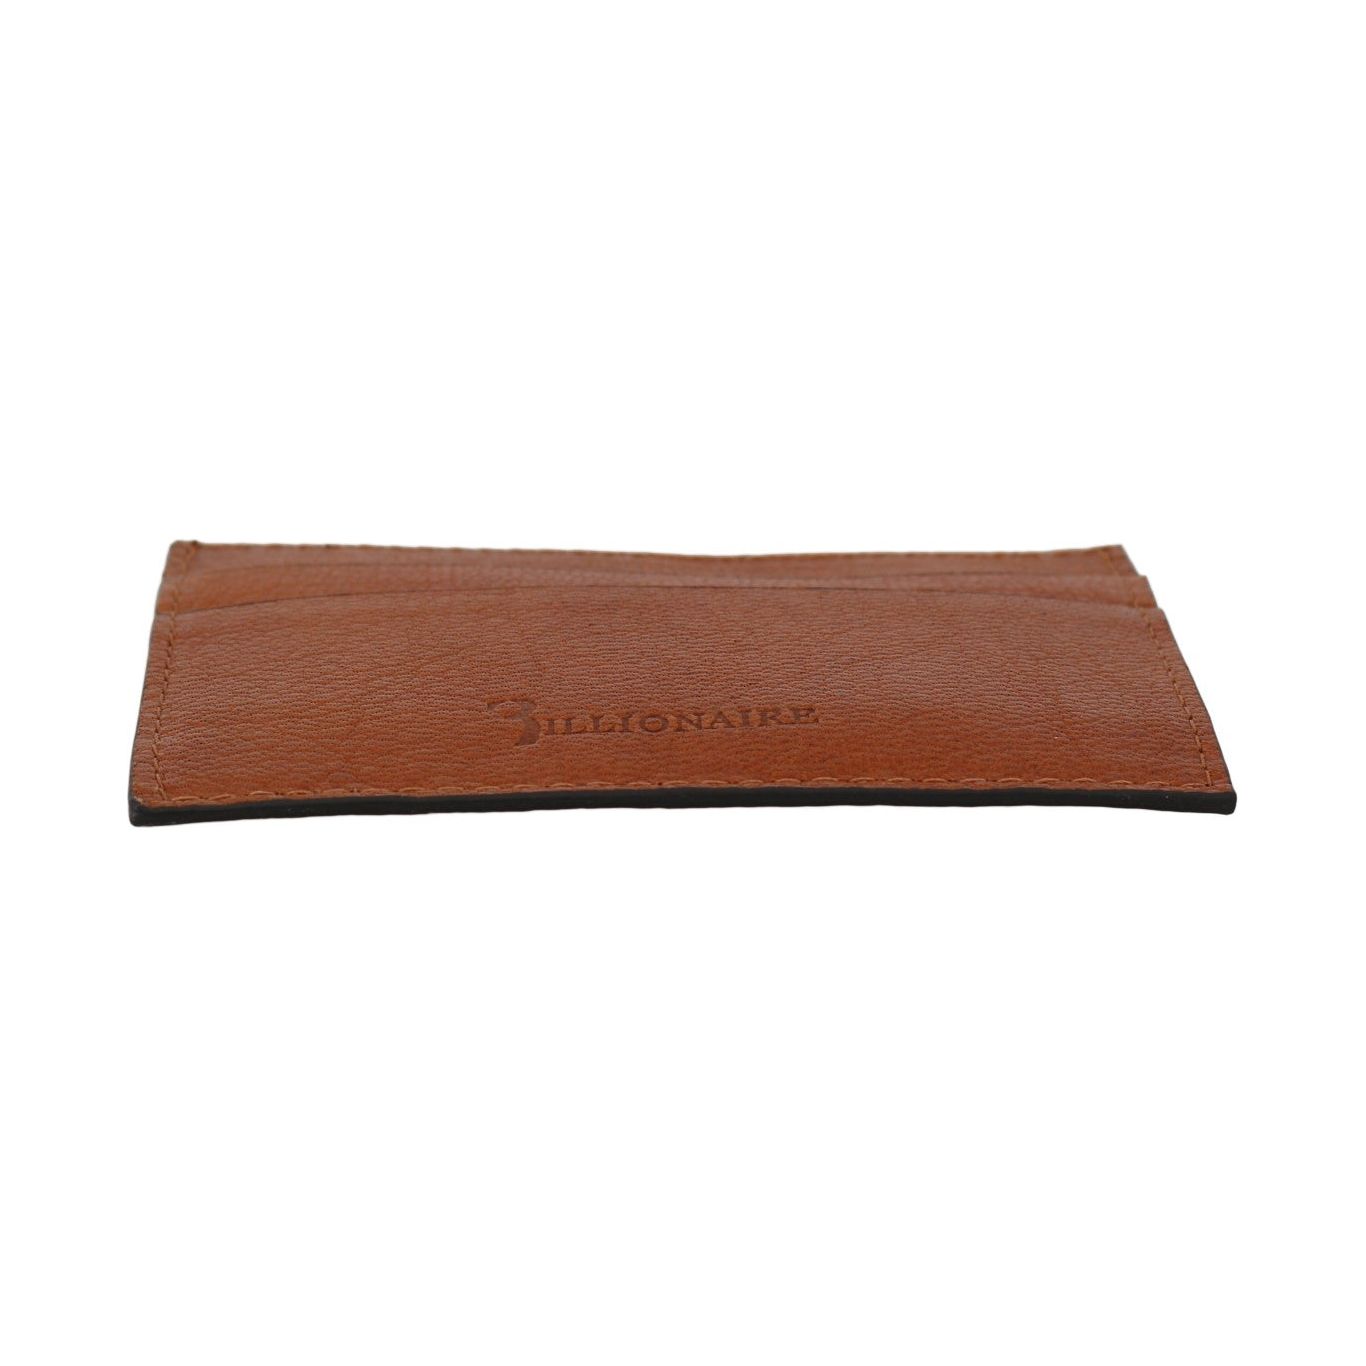 Billionaire Italian Couture Elegant Men's Leather Wallet in Brown brown-leather-cardholder-wallet-2 Wallet